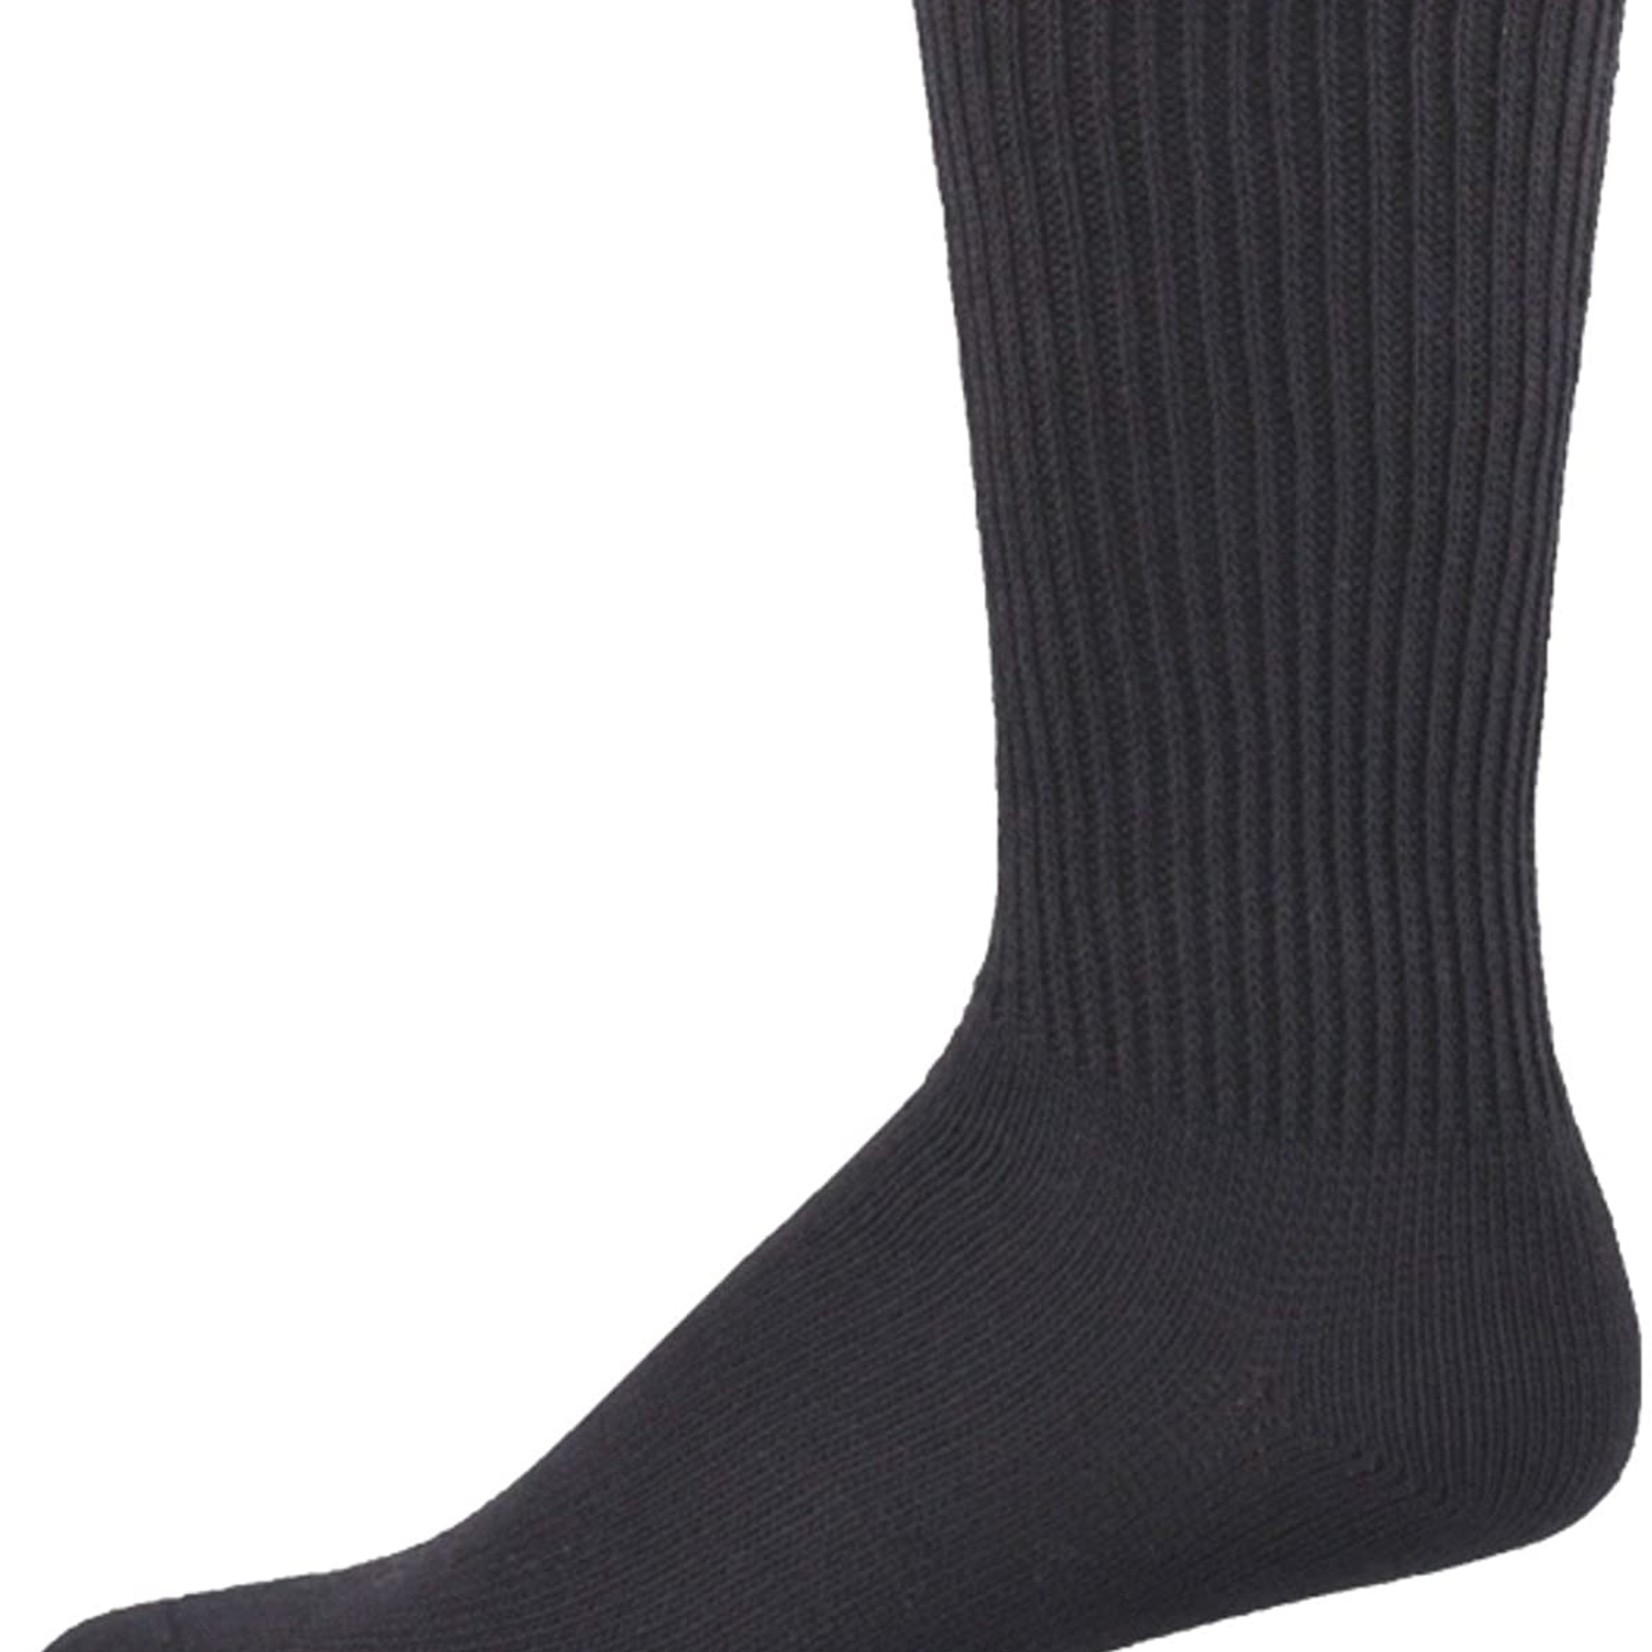 Simcan Socks The Simcan Comfort Sock